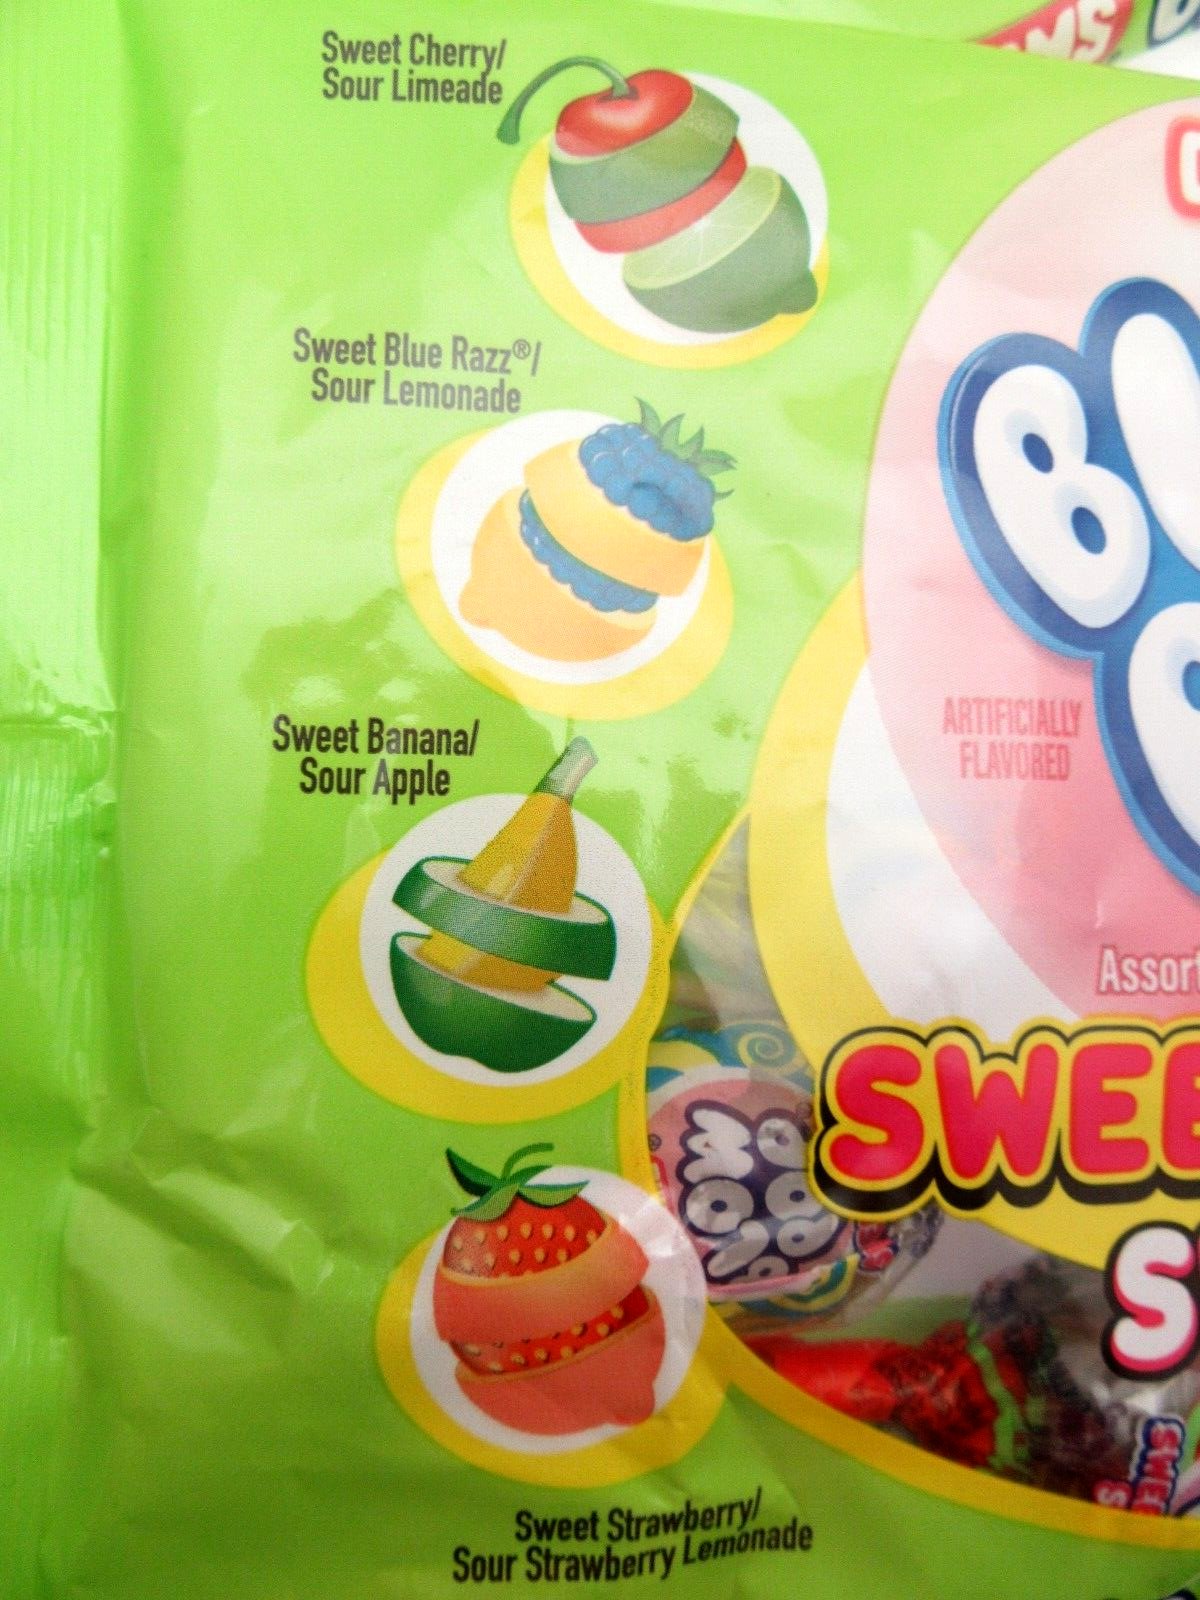 Blow Pop Sweet N Sour Swirls American Lolli Candy Lot of Two 4.55oz Bags